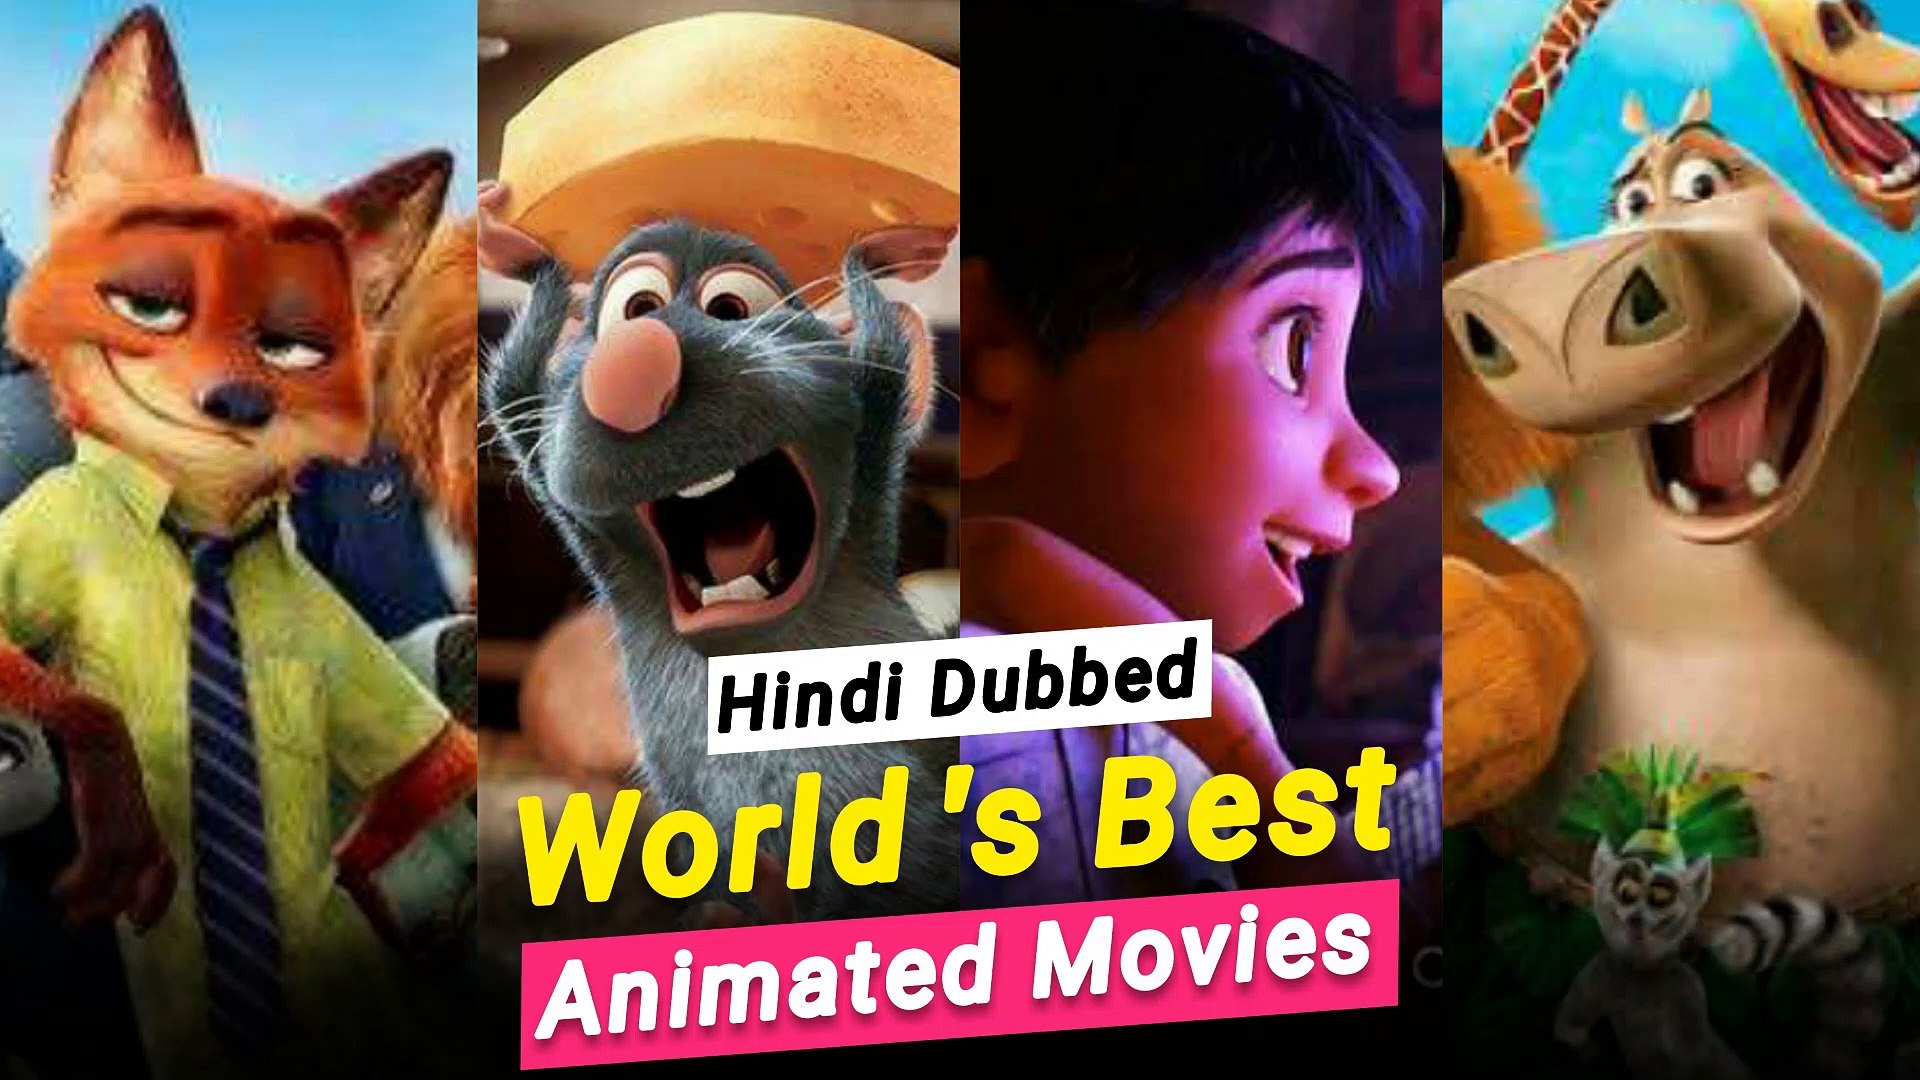 bobby j johnson share animations movies in hindi photos